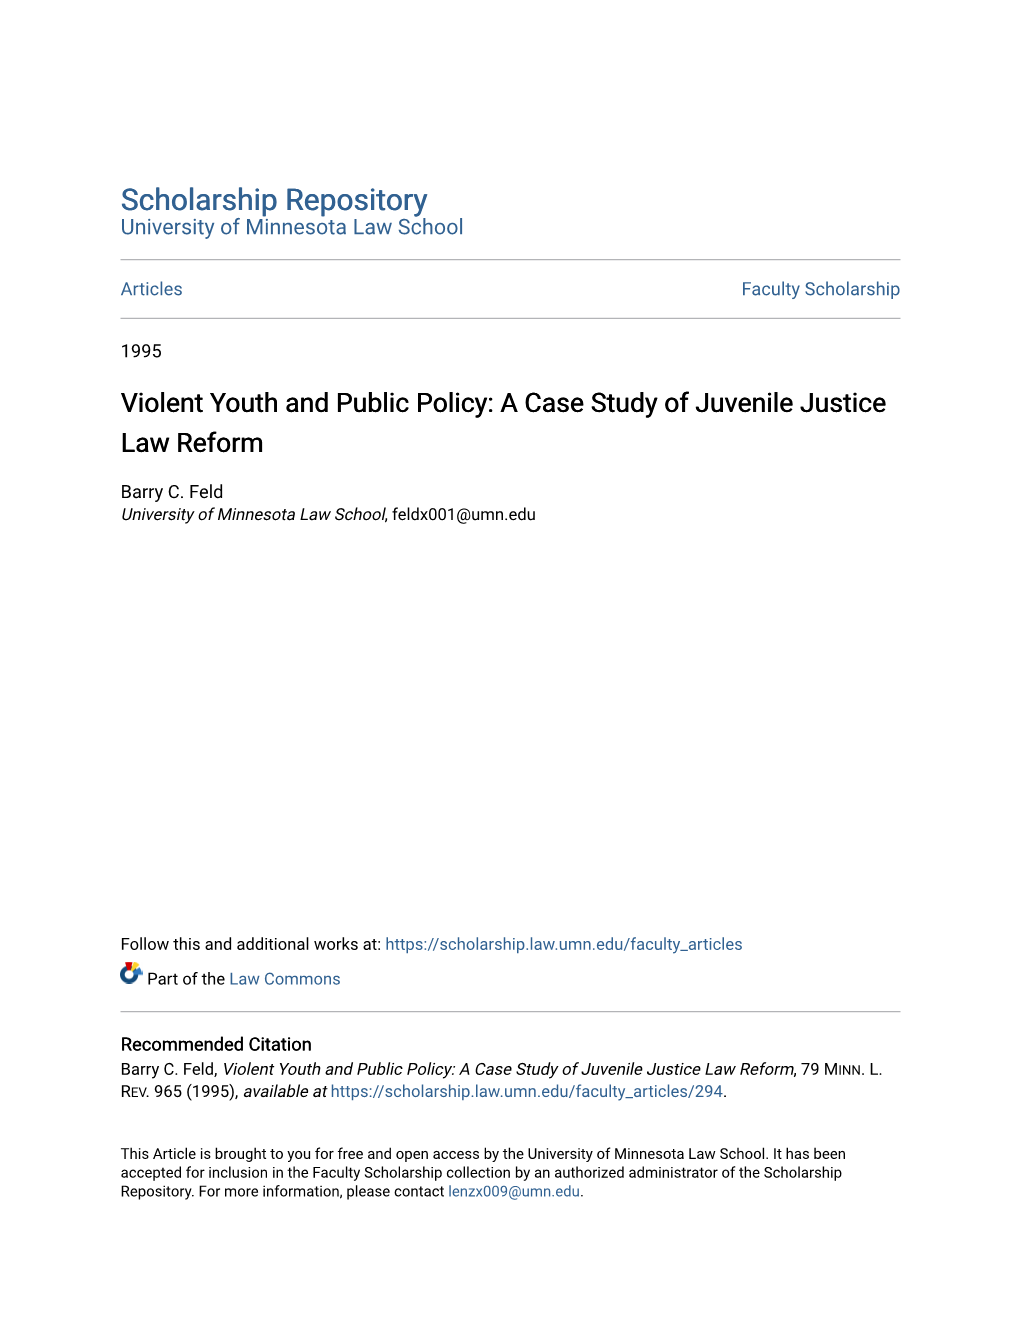 A Case Study of Juvenile Justice Law Reform